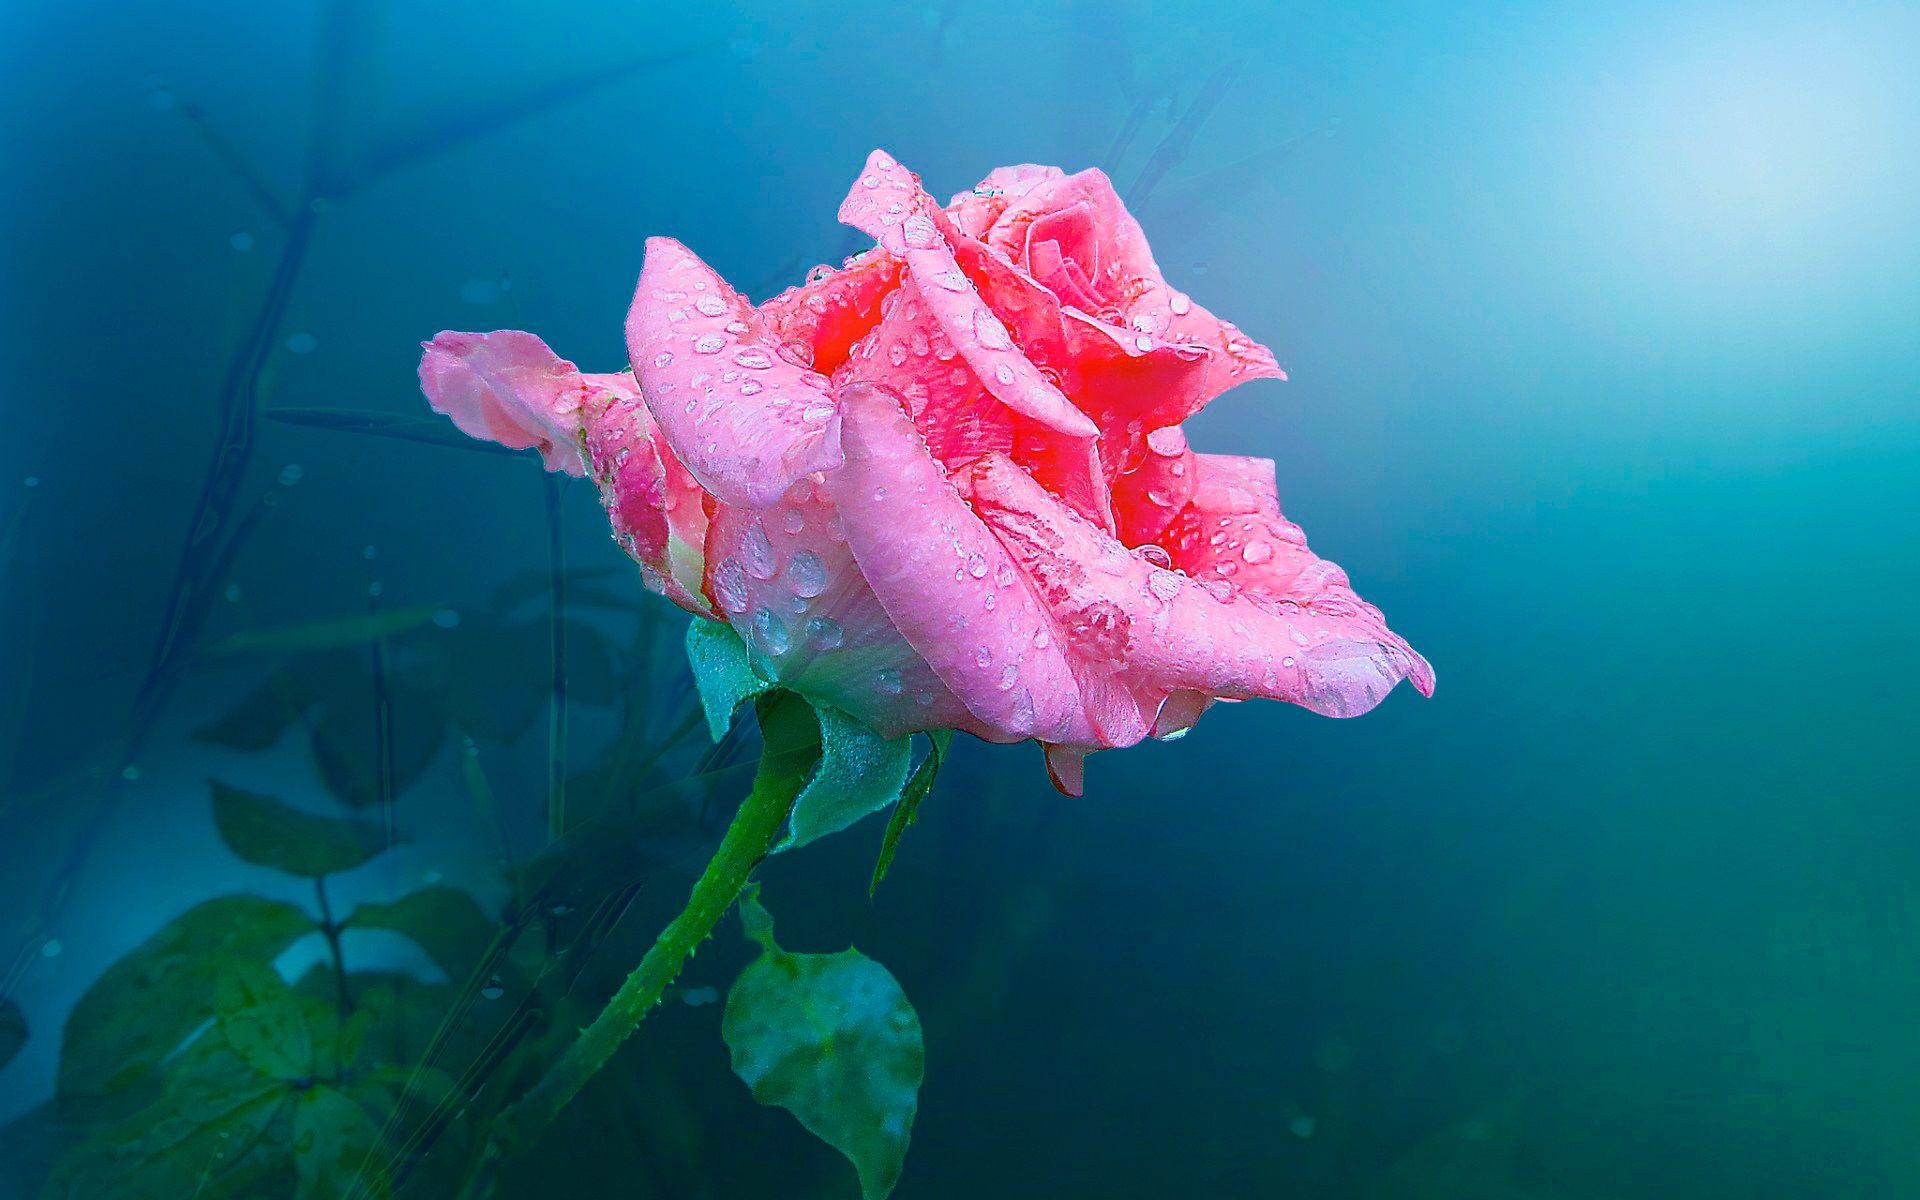 One pink rose flower, water drops wallpaper